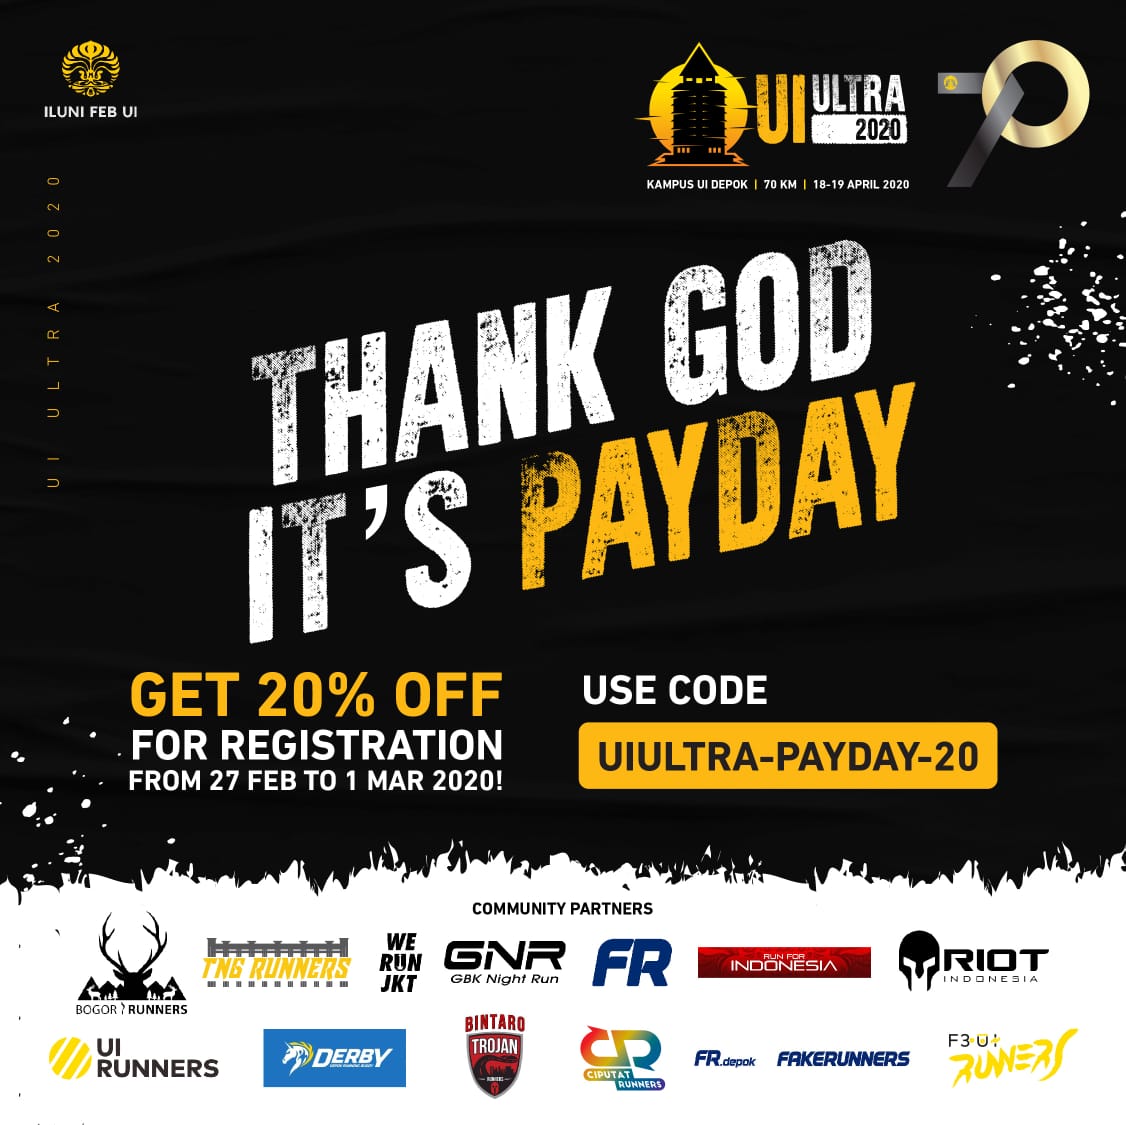 PayDay Promo UI Ultra 2020!